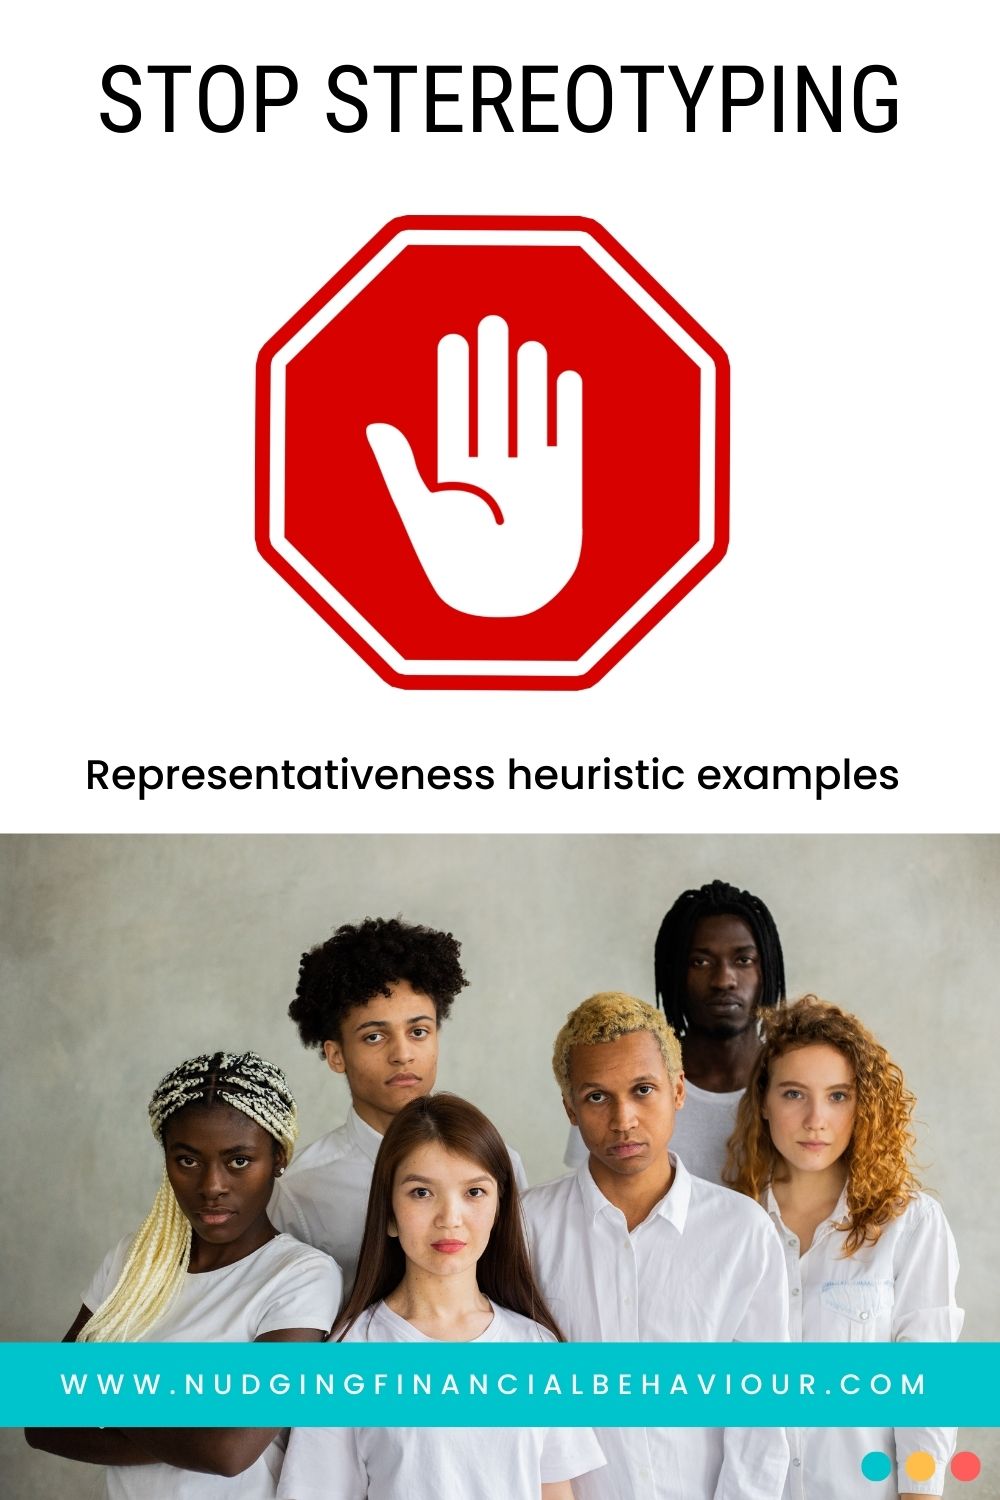 Examples of representative heuristic